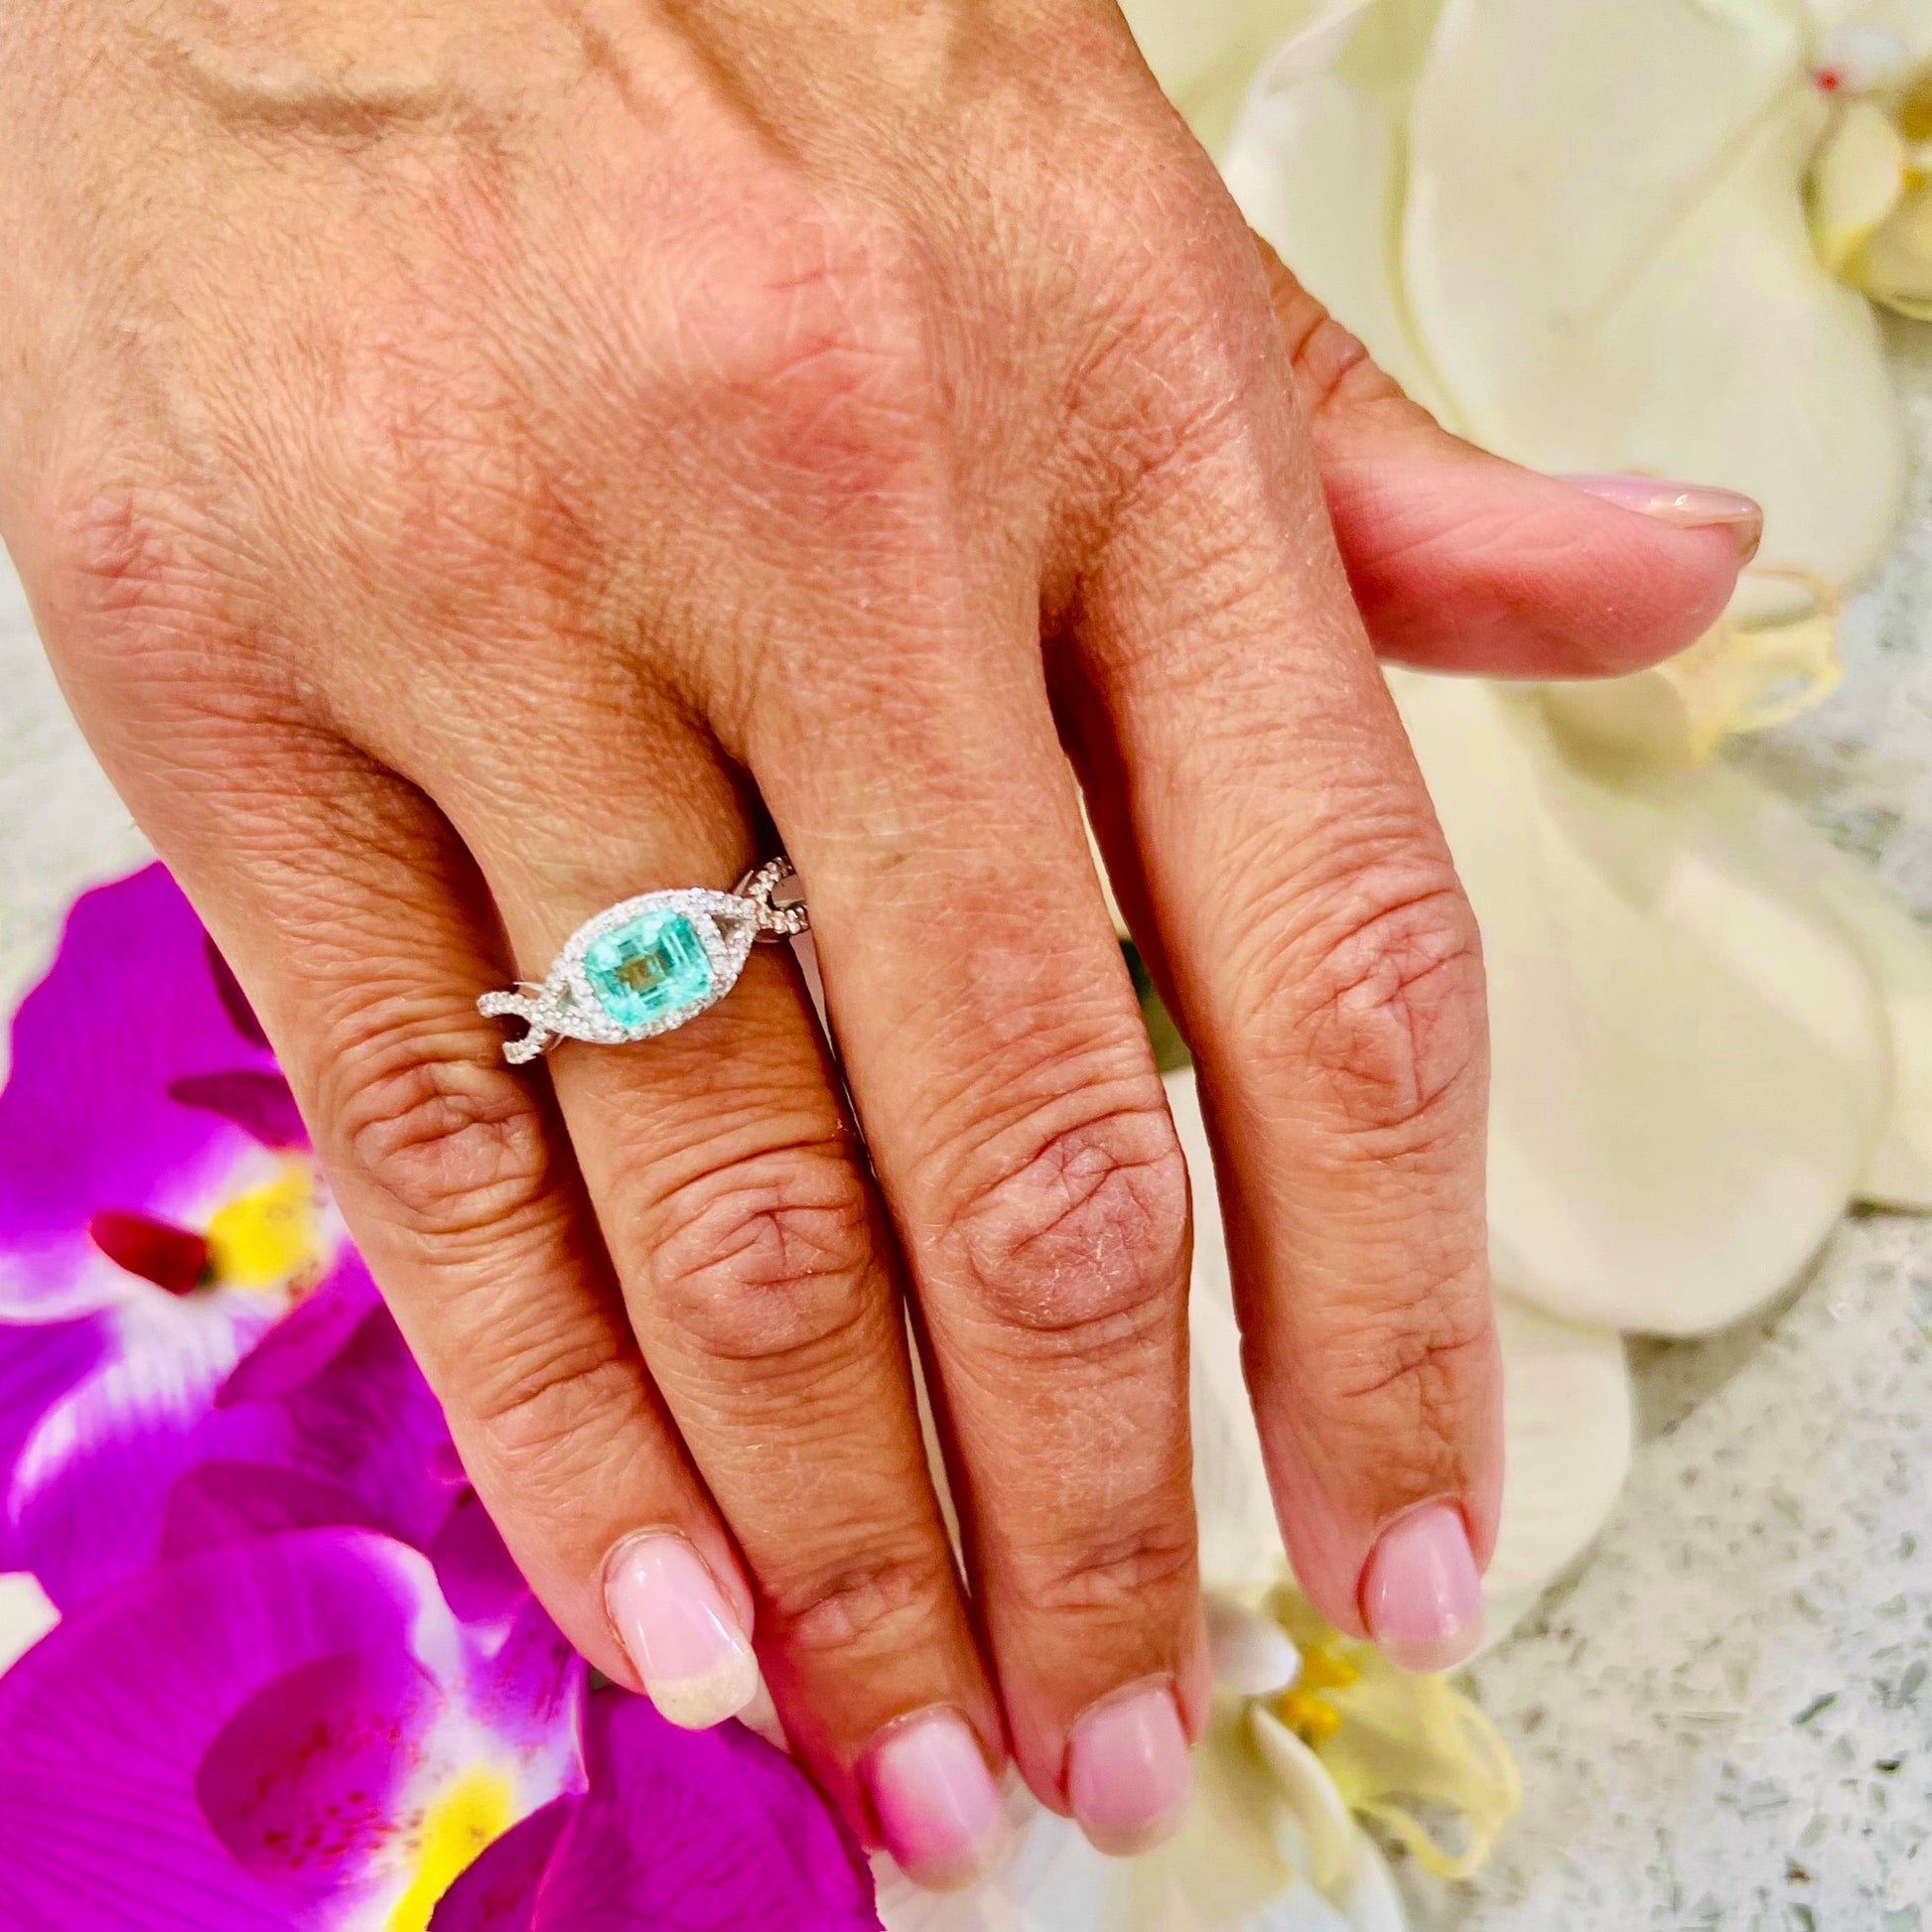 Natural Emerald Diamond Ring 6.5 14k W Gold 1.31 TCW Certified $4,750 216674 - Certified Fine Jewelry